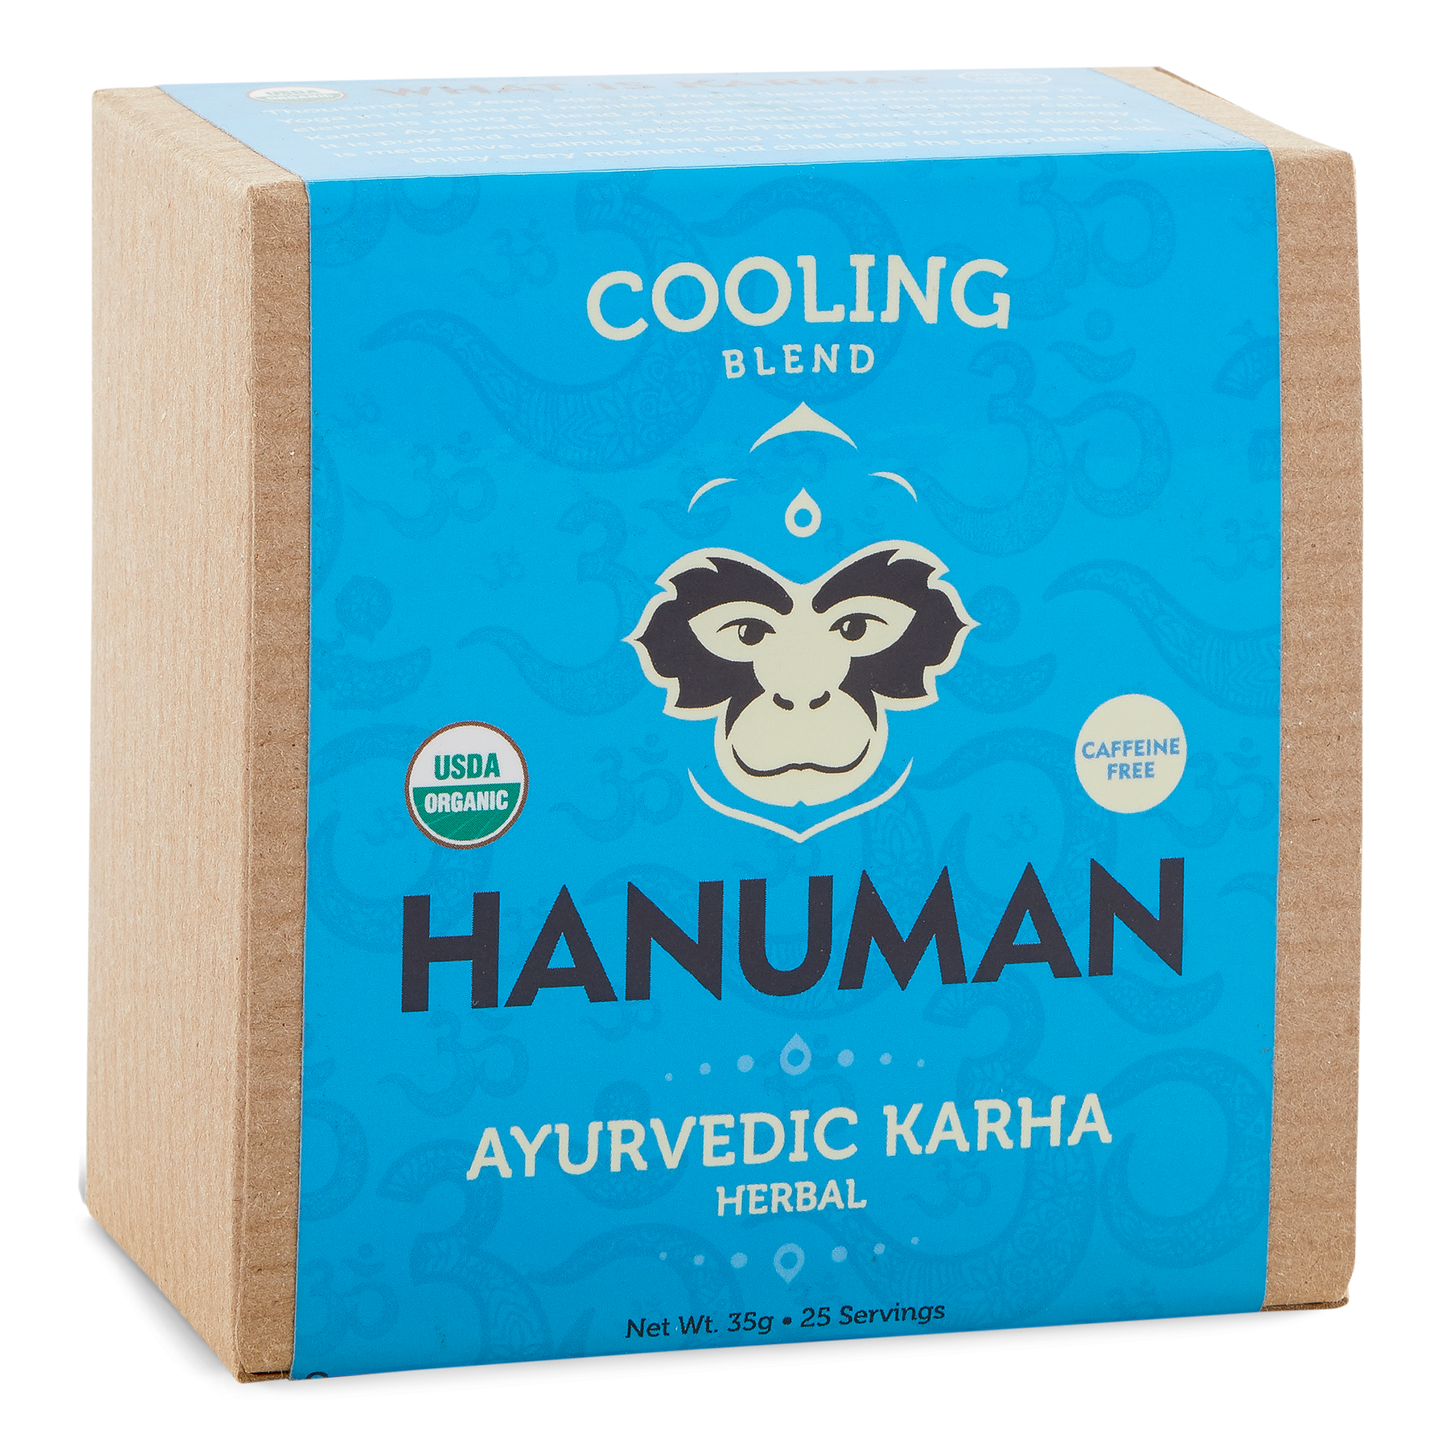 Ayurvedic & Organic Karha: Cooling (Spices, No Caffeine)